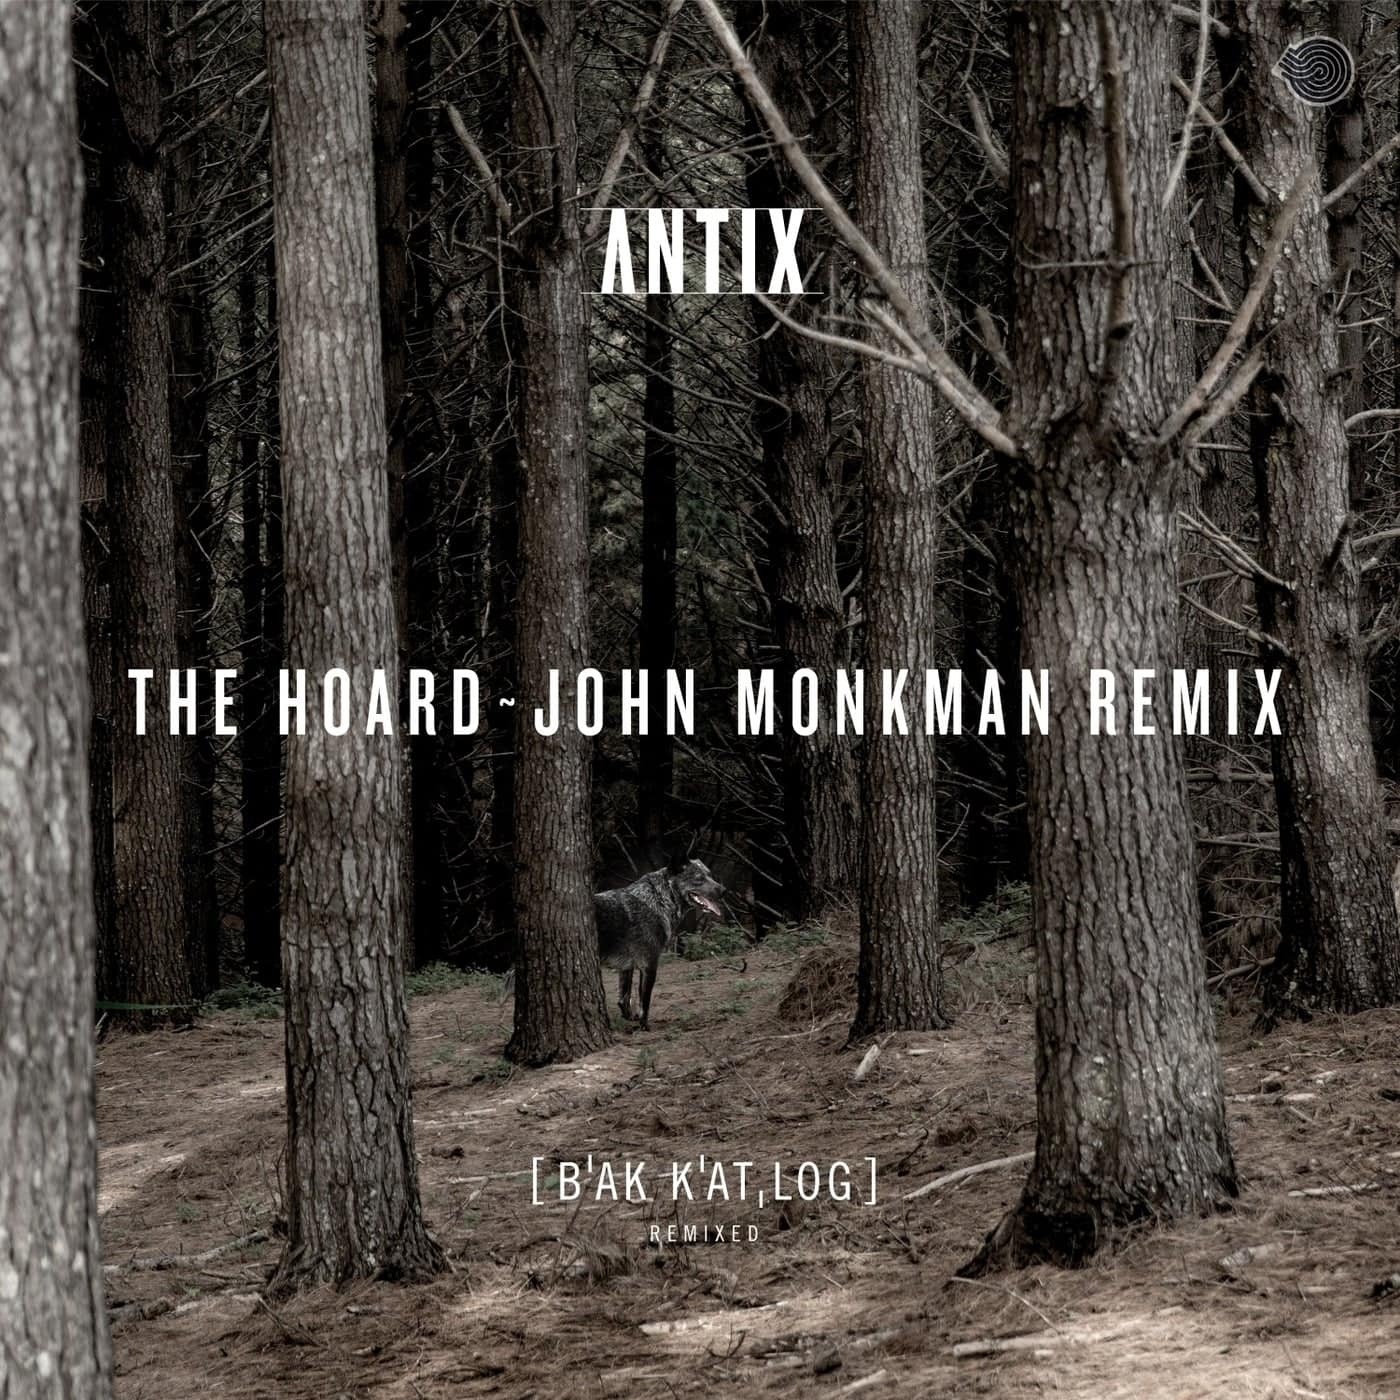 image cover: The Hoard (John Monkman remix) by Antix on Iboga Records